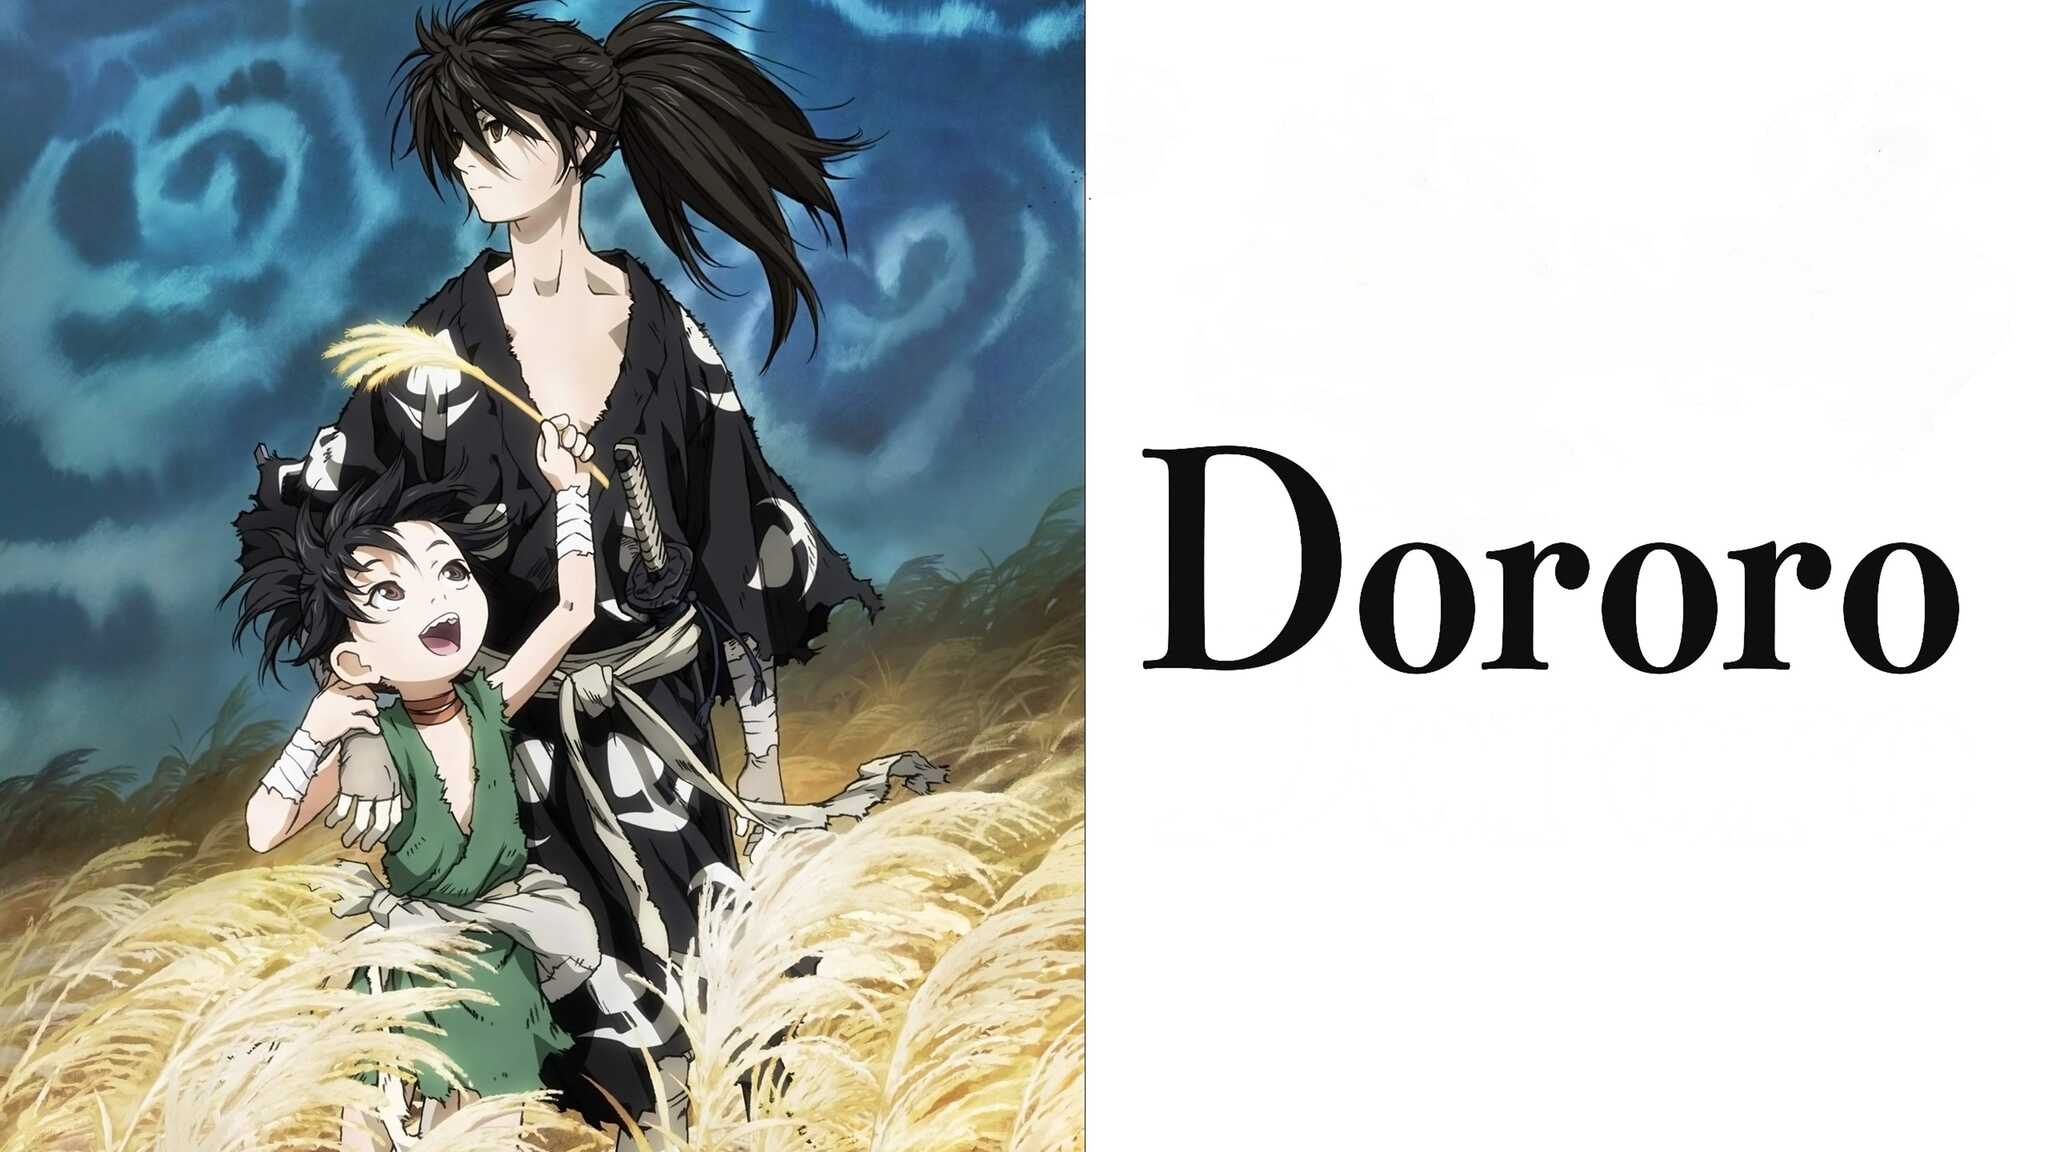 Dororo The Story of Daigo (TV Episode 2019) - IMDb